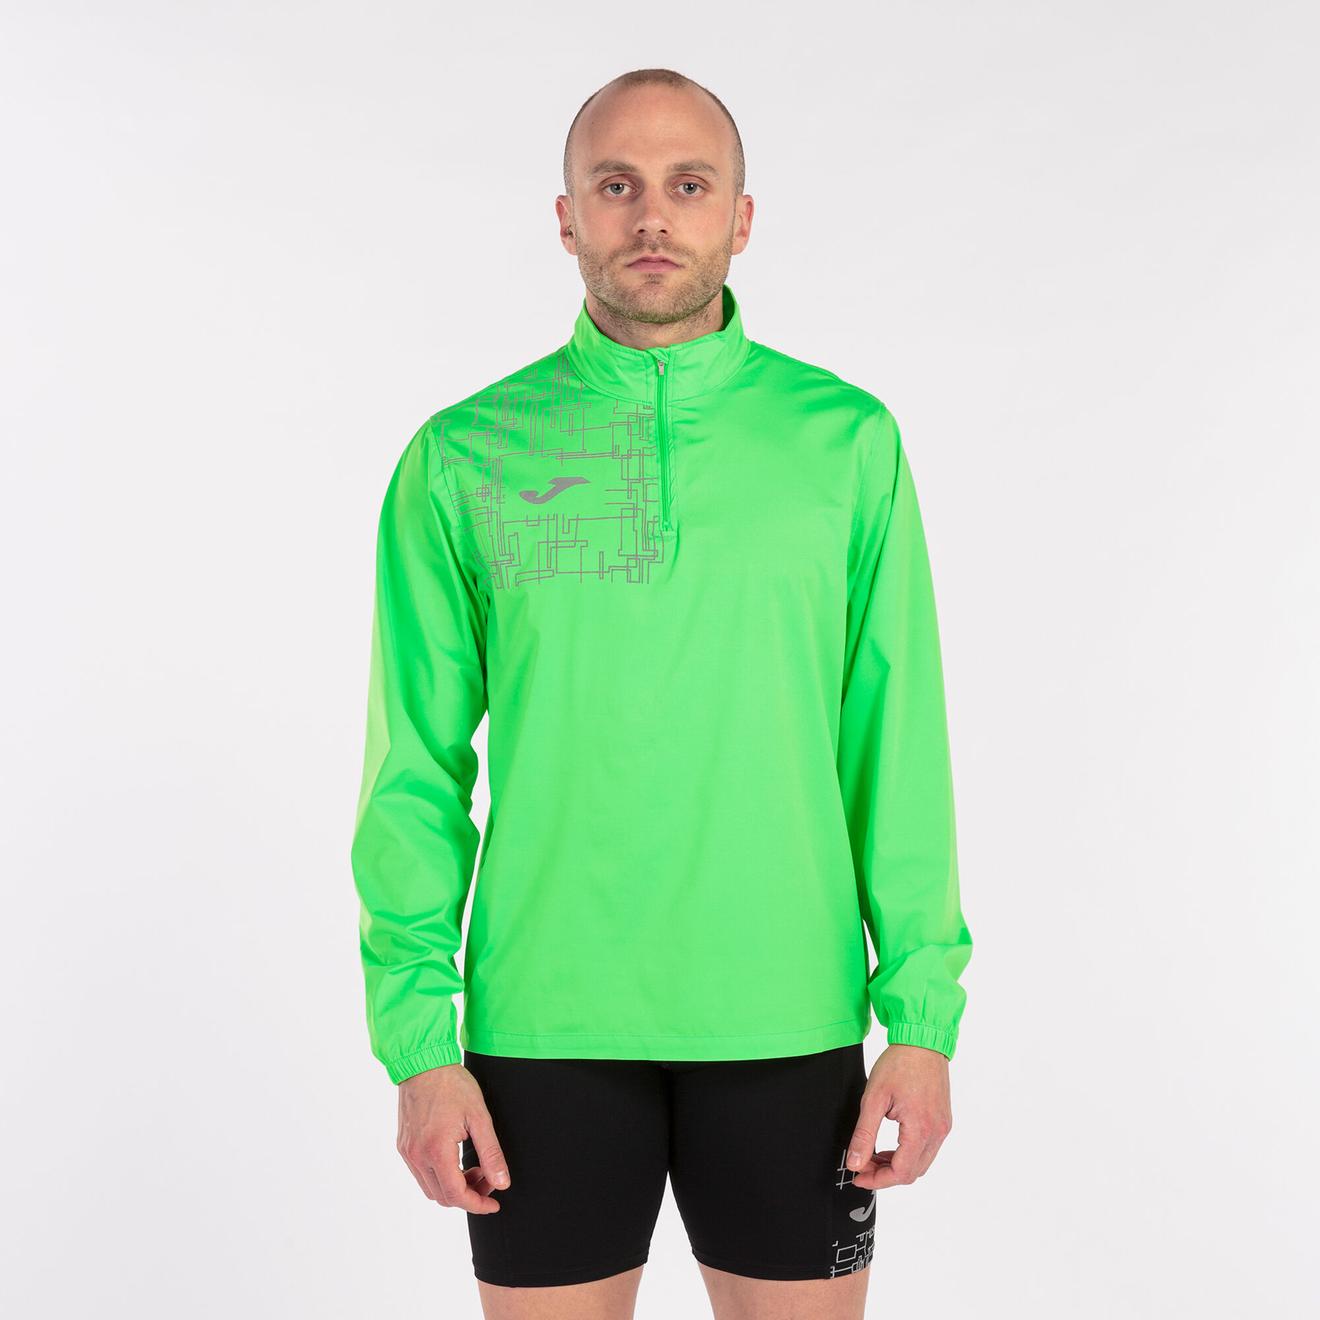 Sweatshirt man Elite VIII fluorescent green offers at £31.5 in Joma